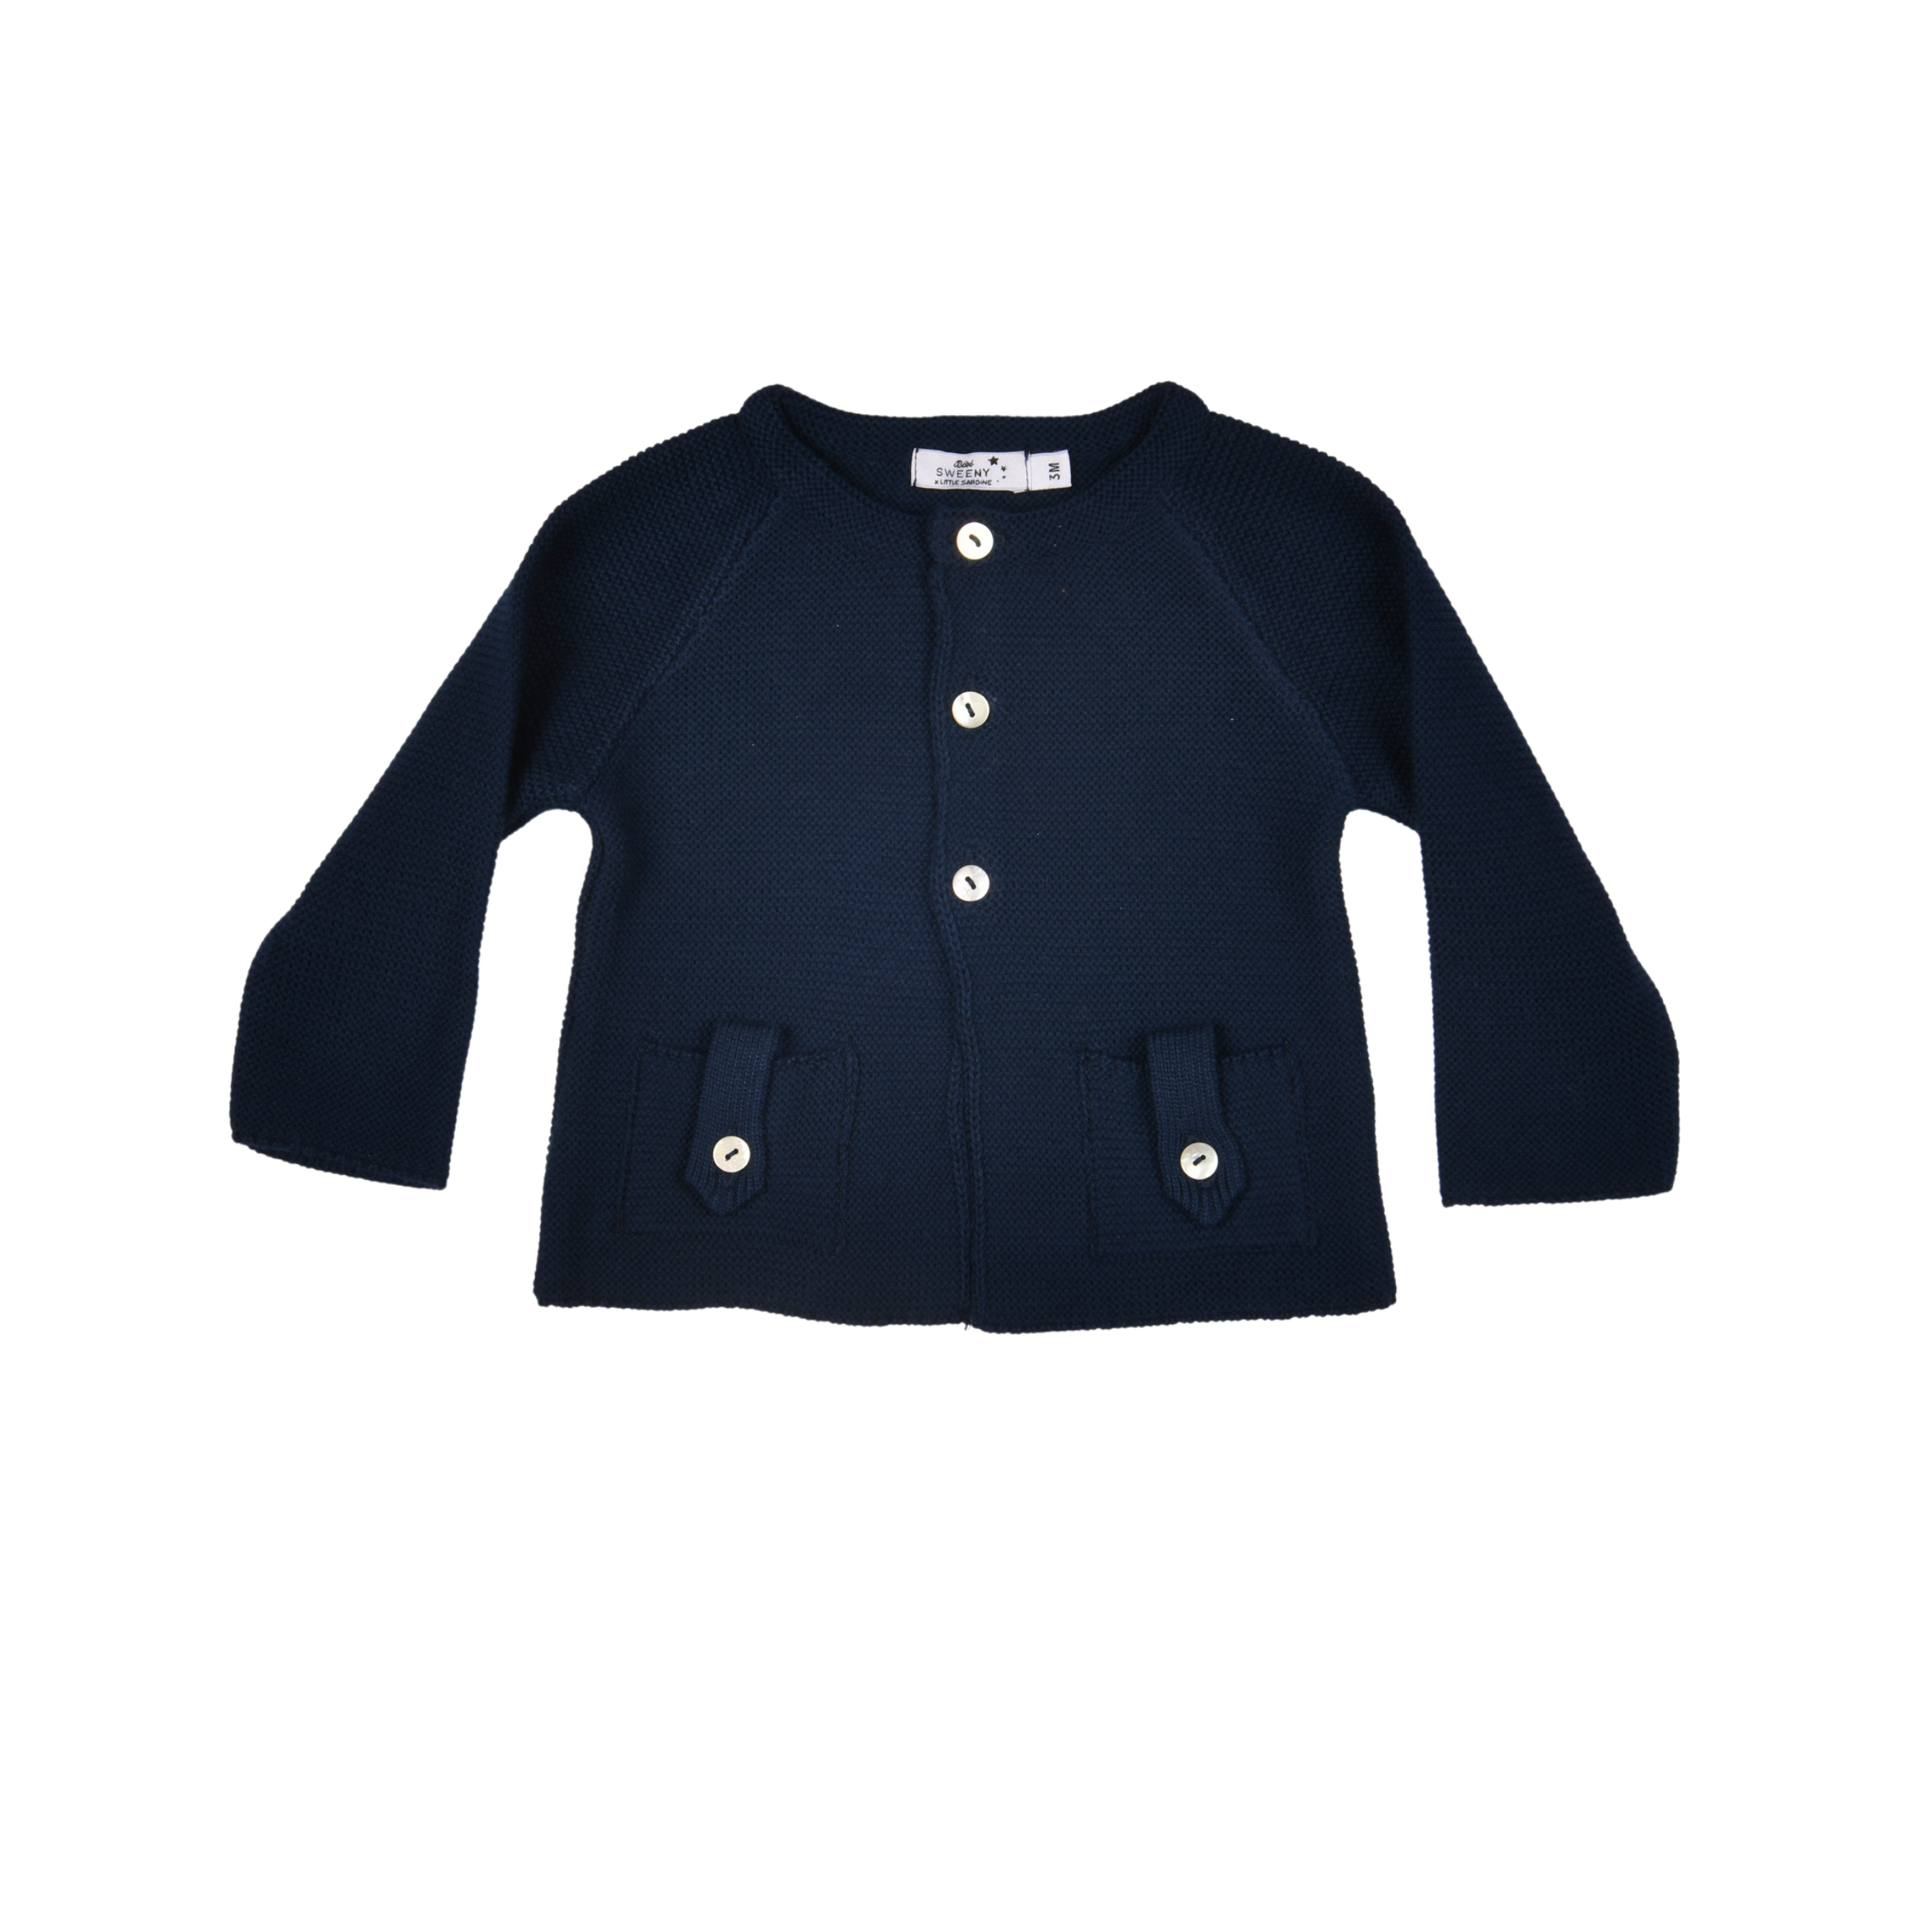 Navy Blue Organic Cotton Knit Cardigan